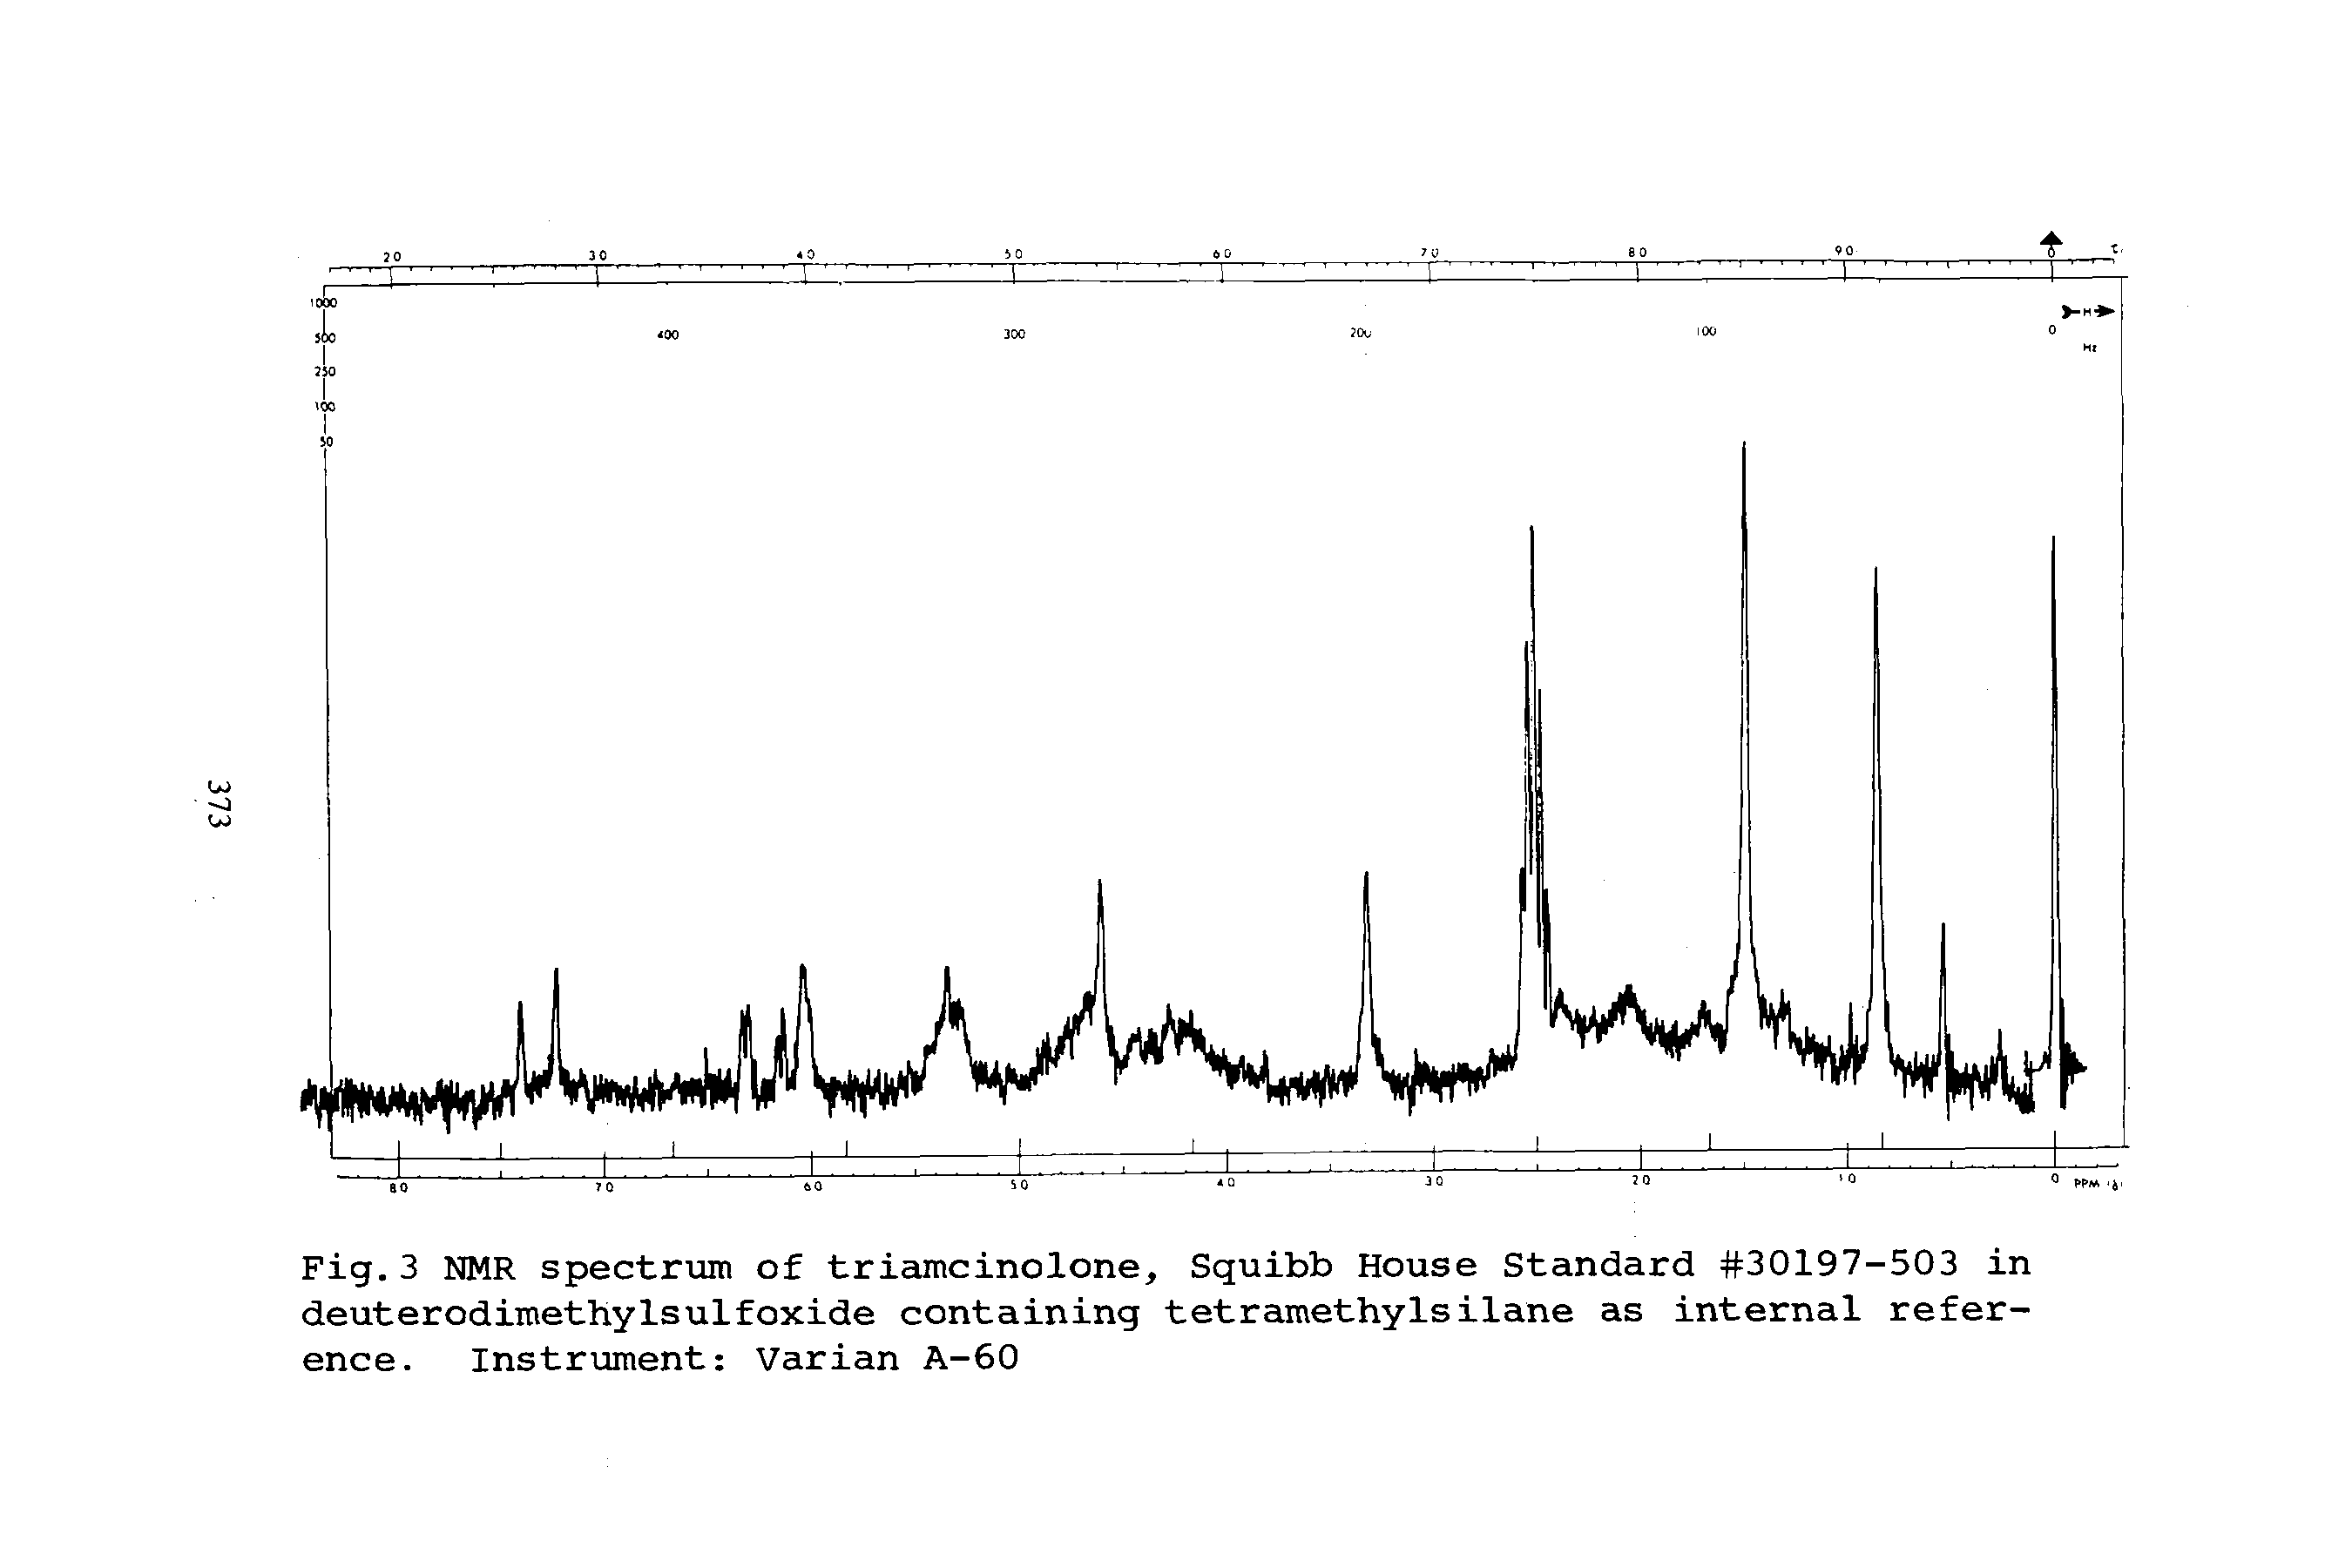 Fig.3 NMR spectrum of triamcinolone, Squibb House Standard 30197-503 in deuterodimethylsulfoxide containing tetramethylsilane as internal reference. Instrument Varian A-60...